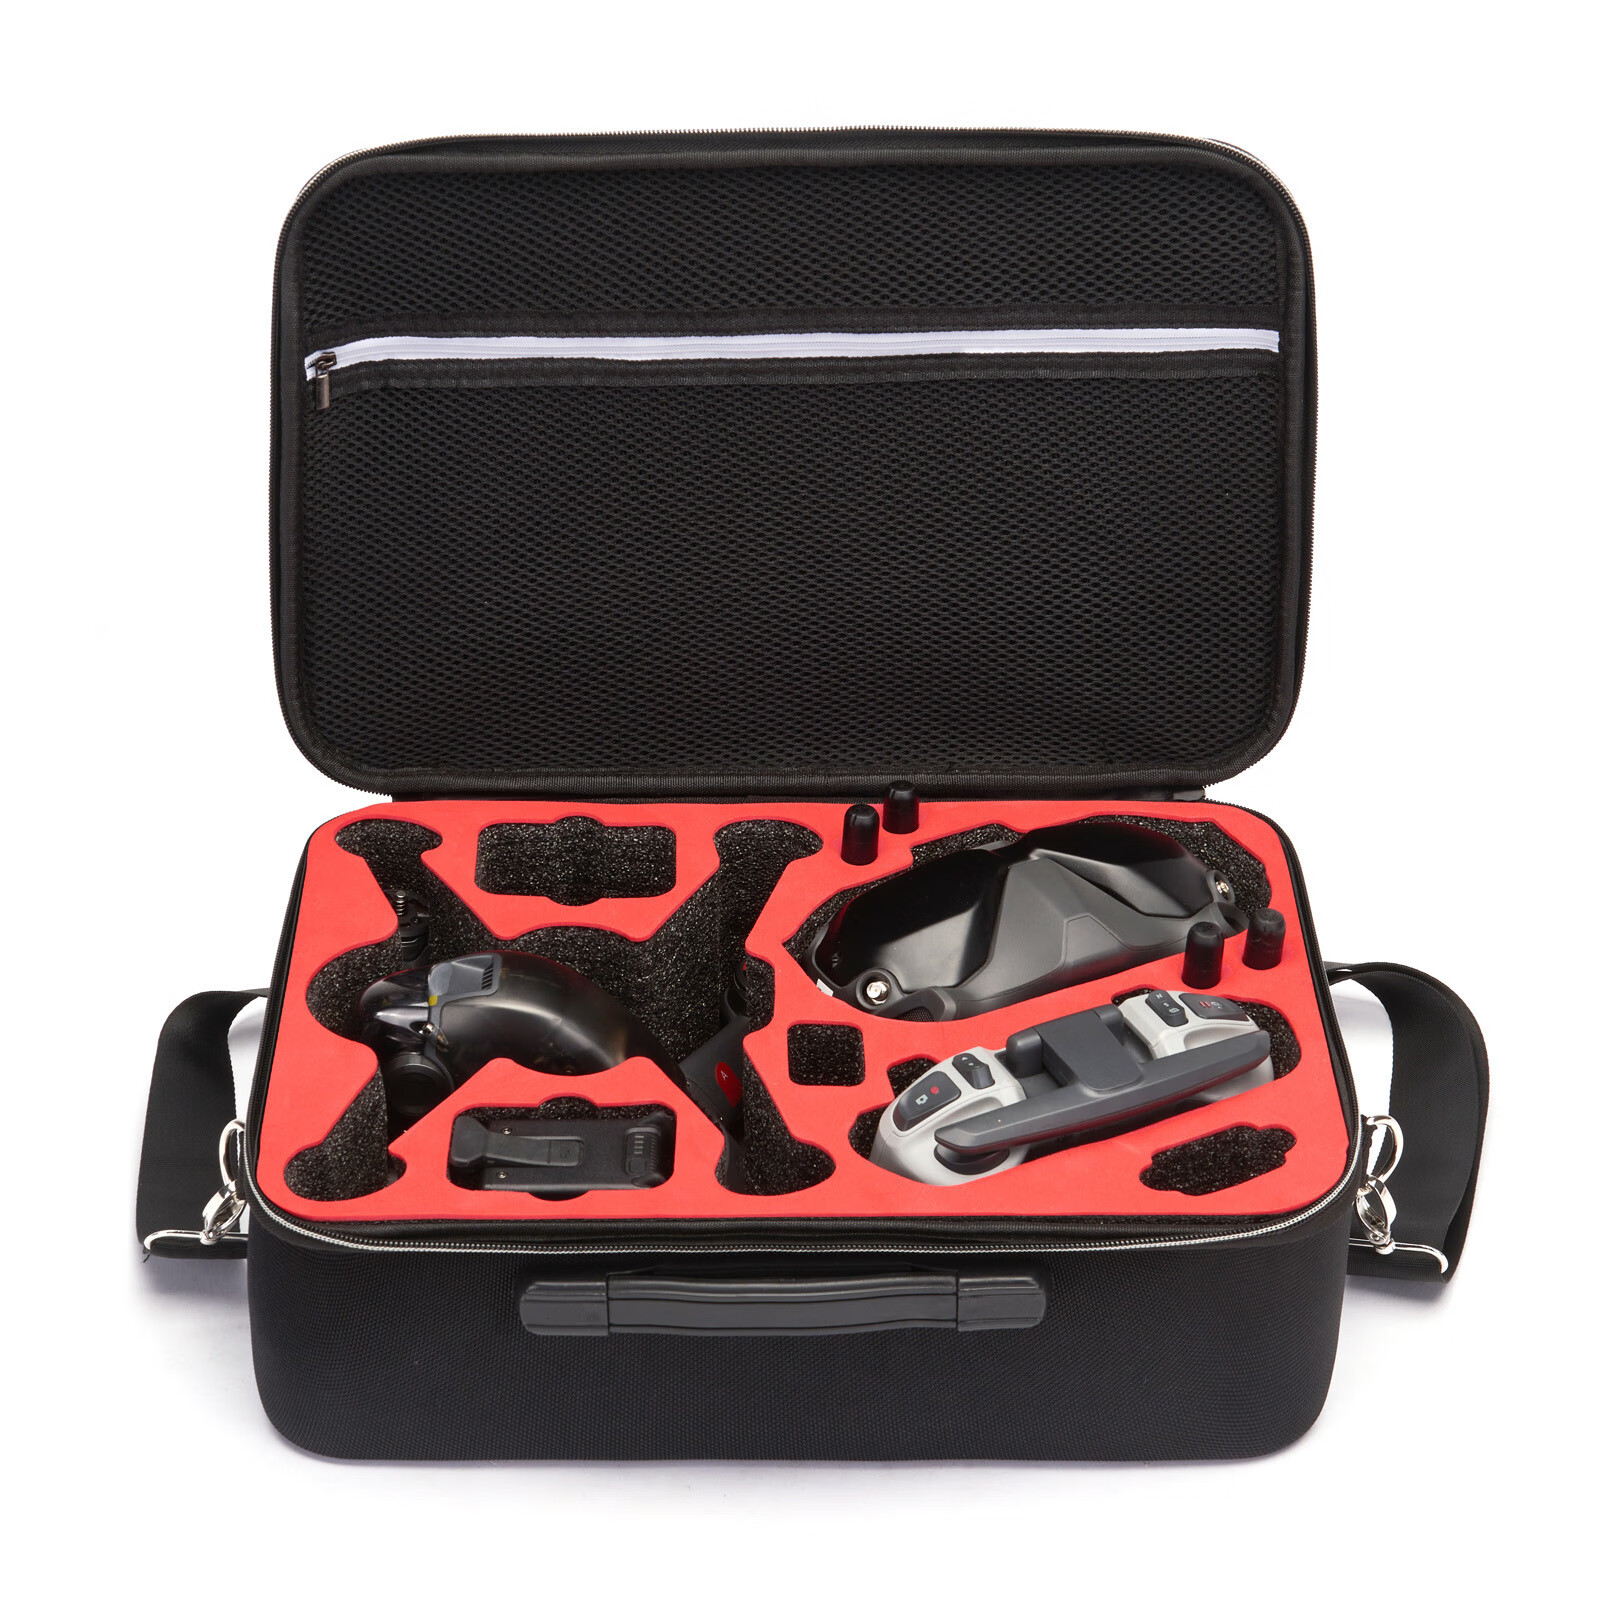 FPV Combo Drone Portable Shoulder Bag